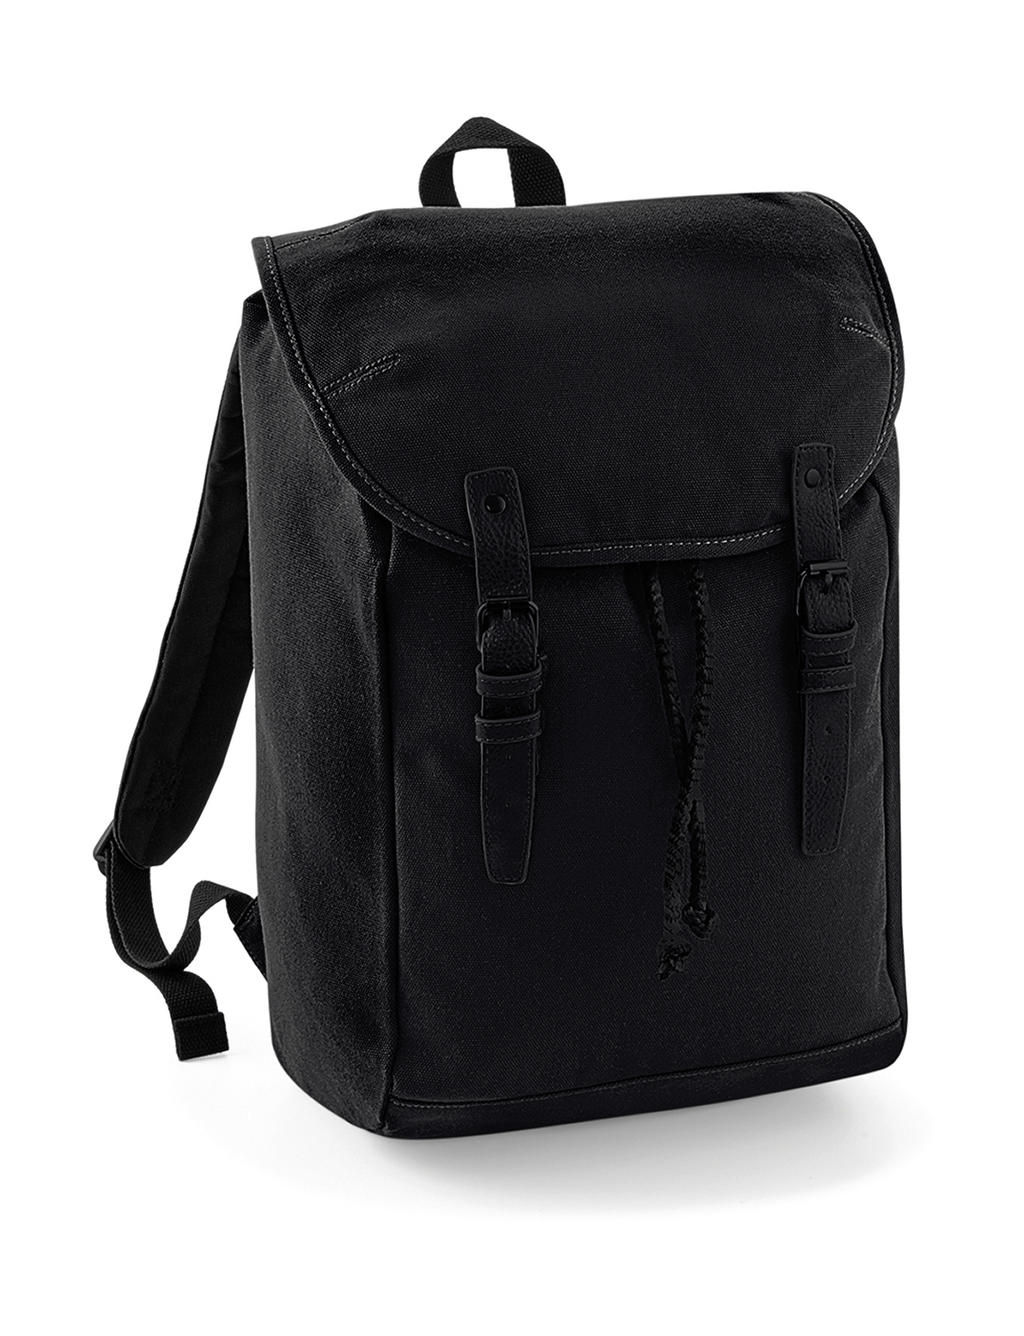  Vintage Backpack in Farbe Black/Black